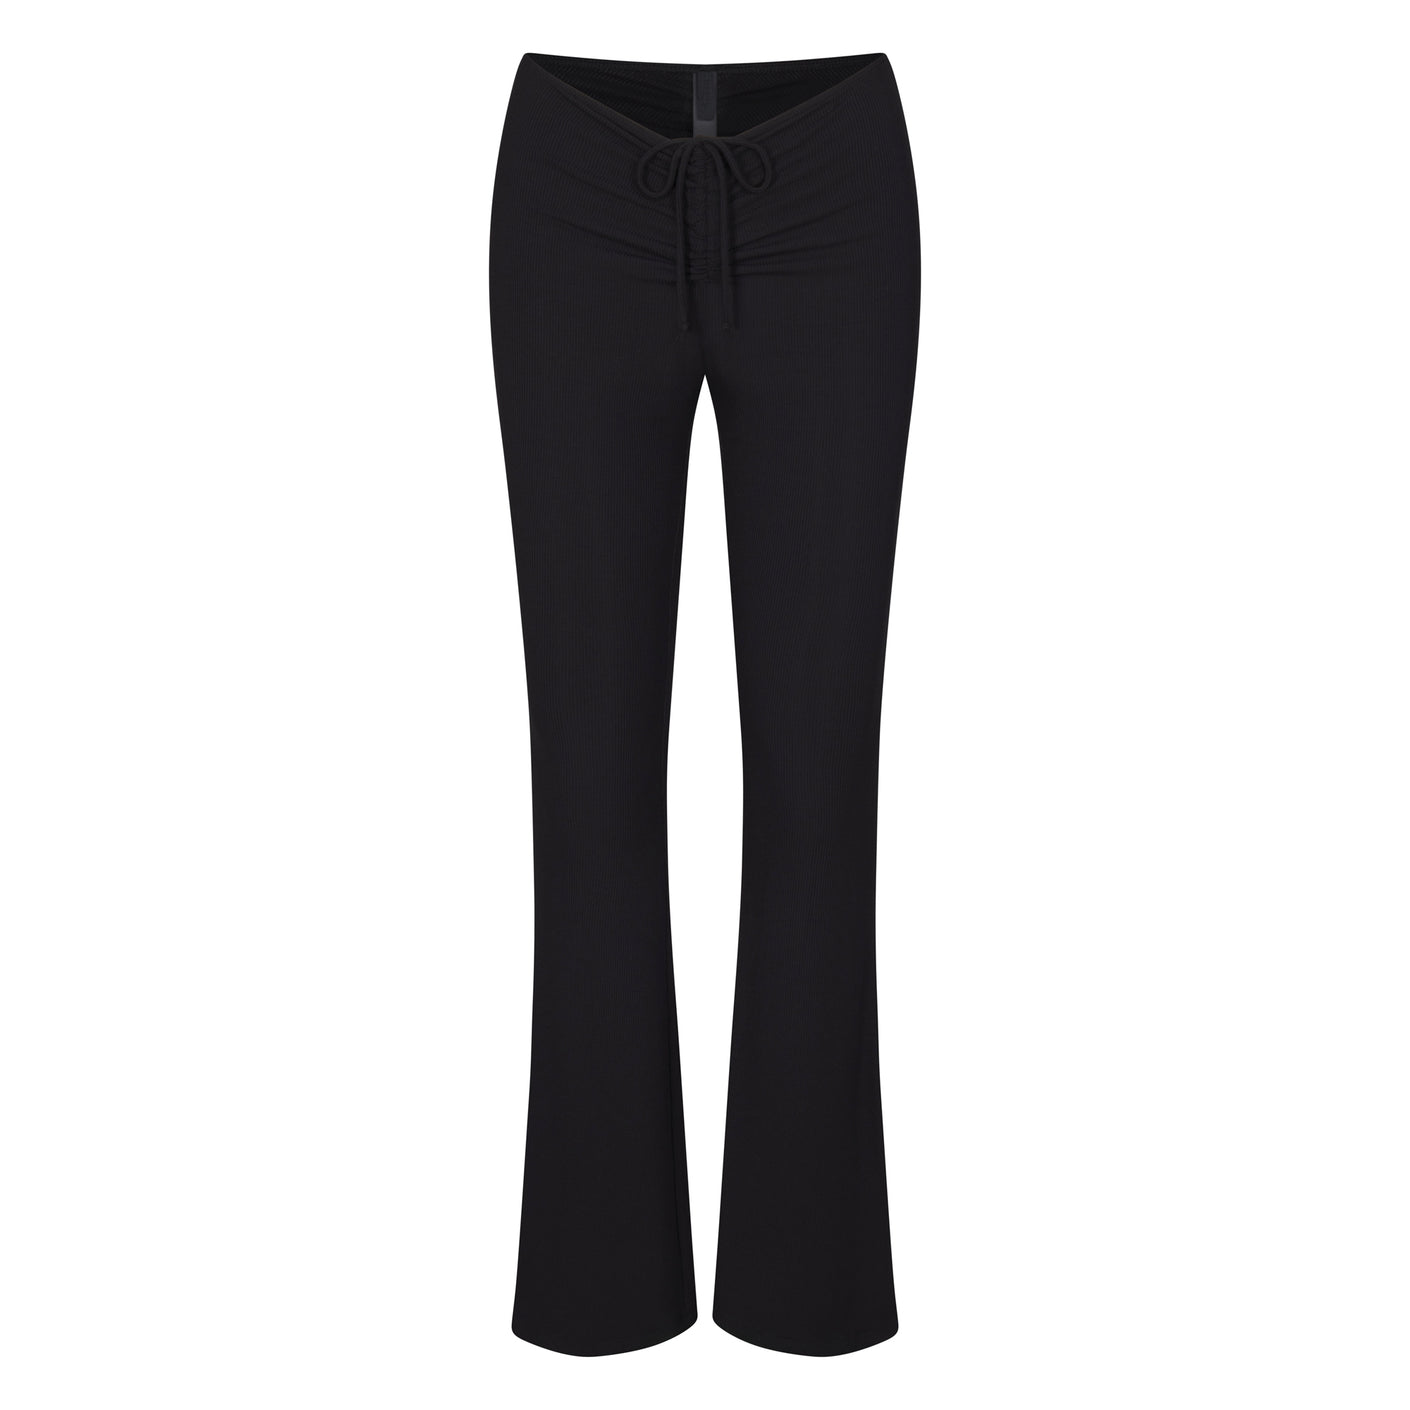 Buy Comfort Lady Ultra Soft Women's Lounger Pants Regular Fit